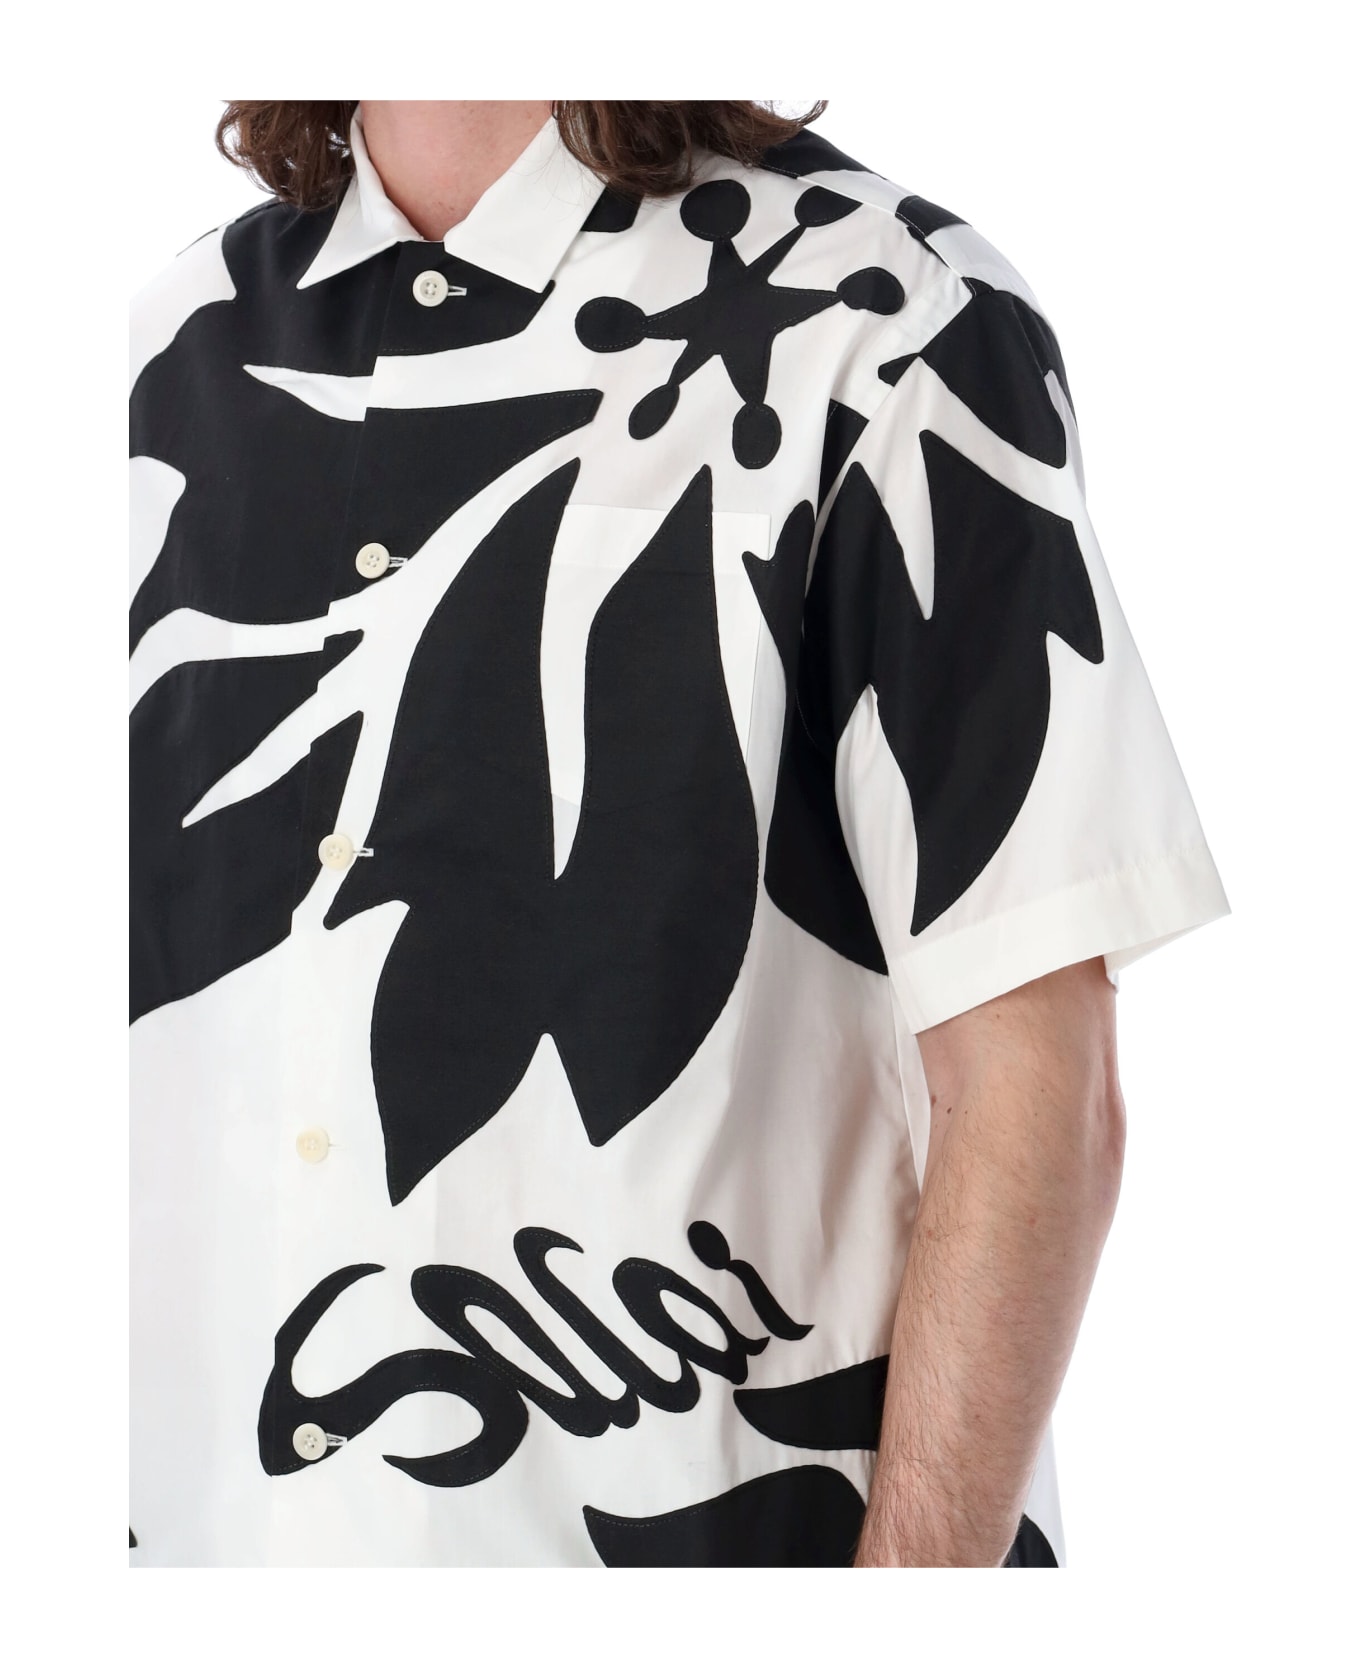 Sacai Floral Patch Shirt - OFF WHITE BLACK